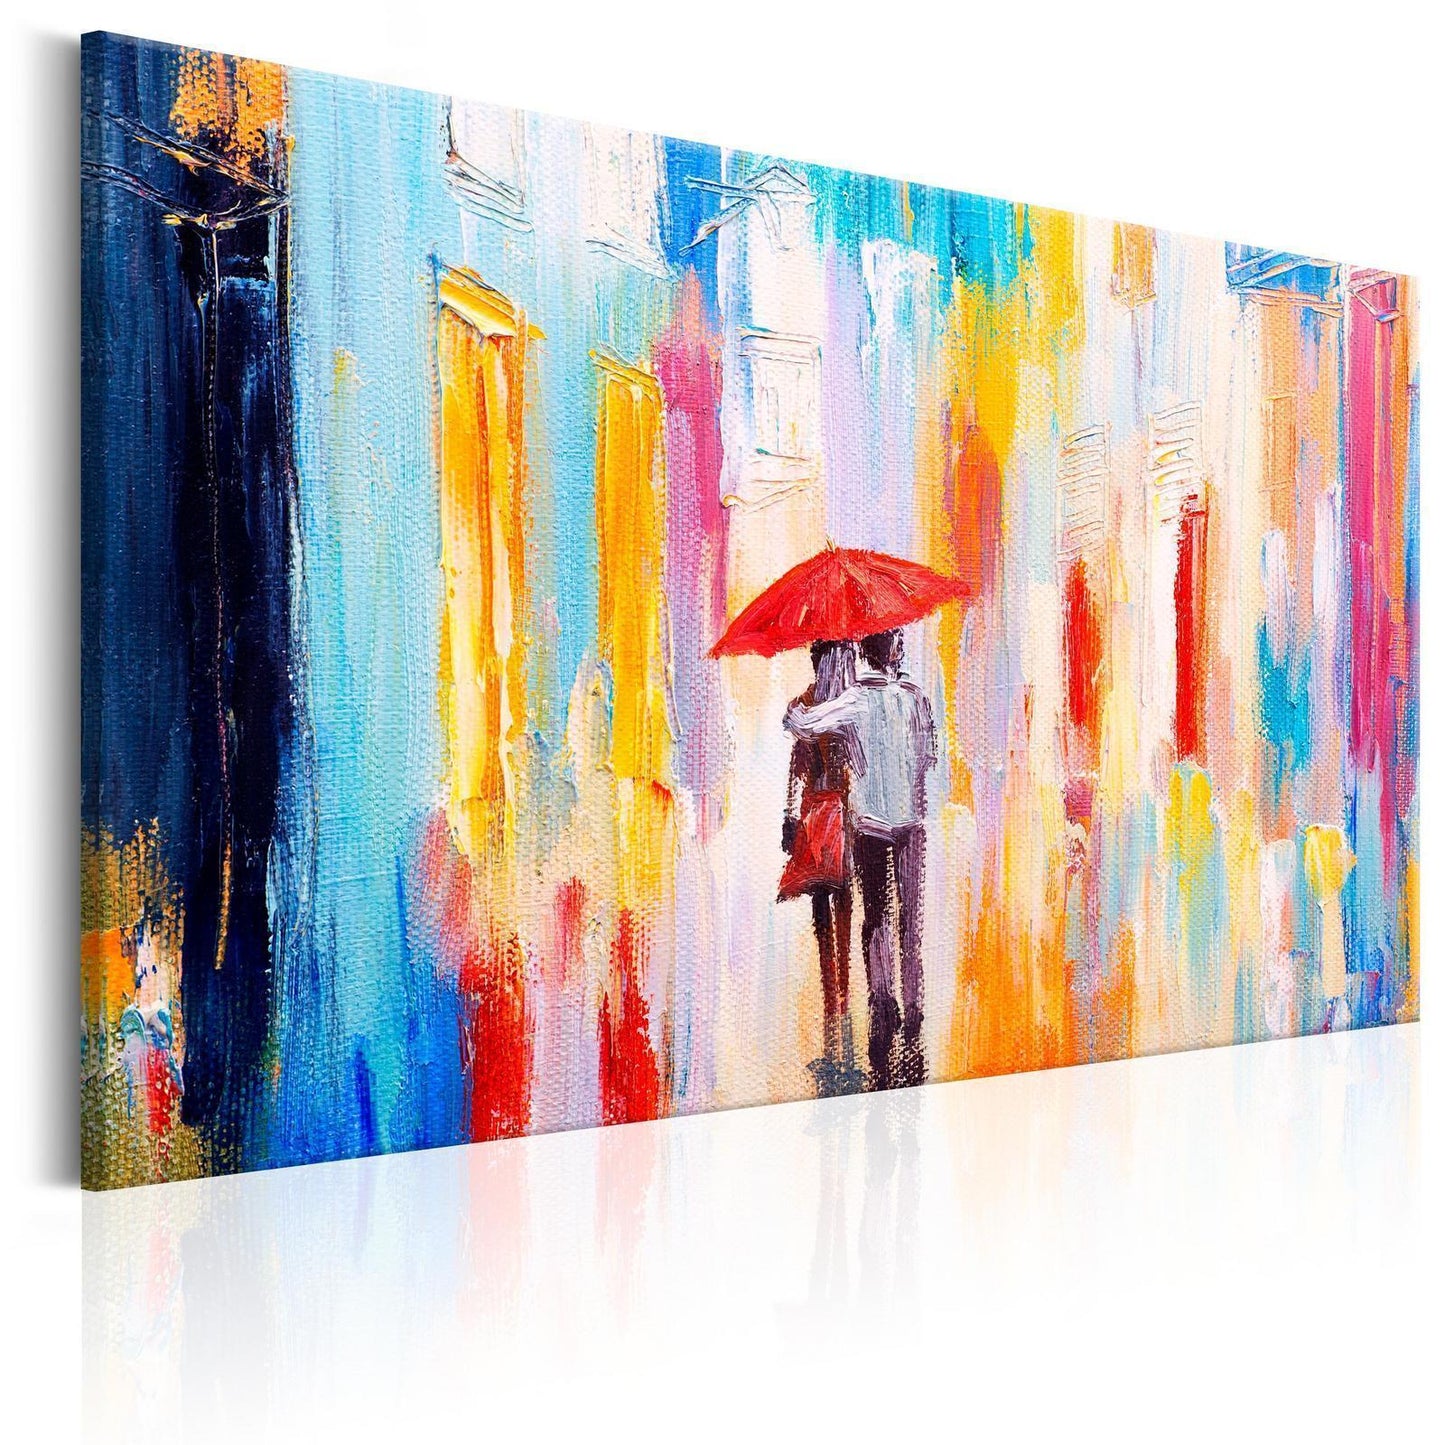 Schilderij - Under the Love Umbrella